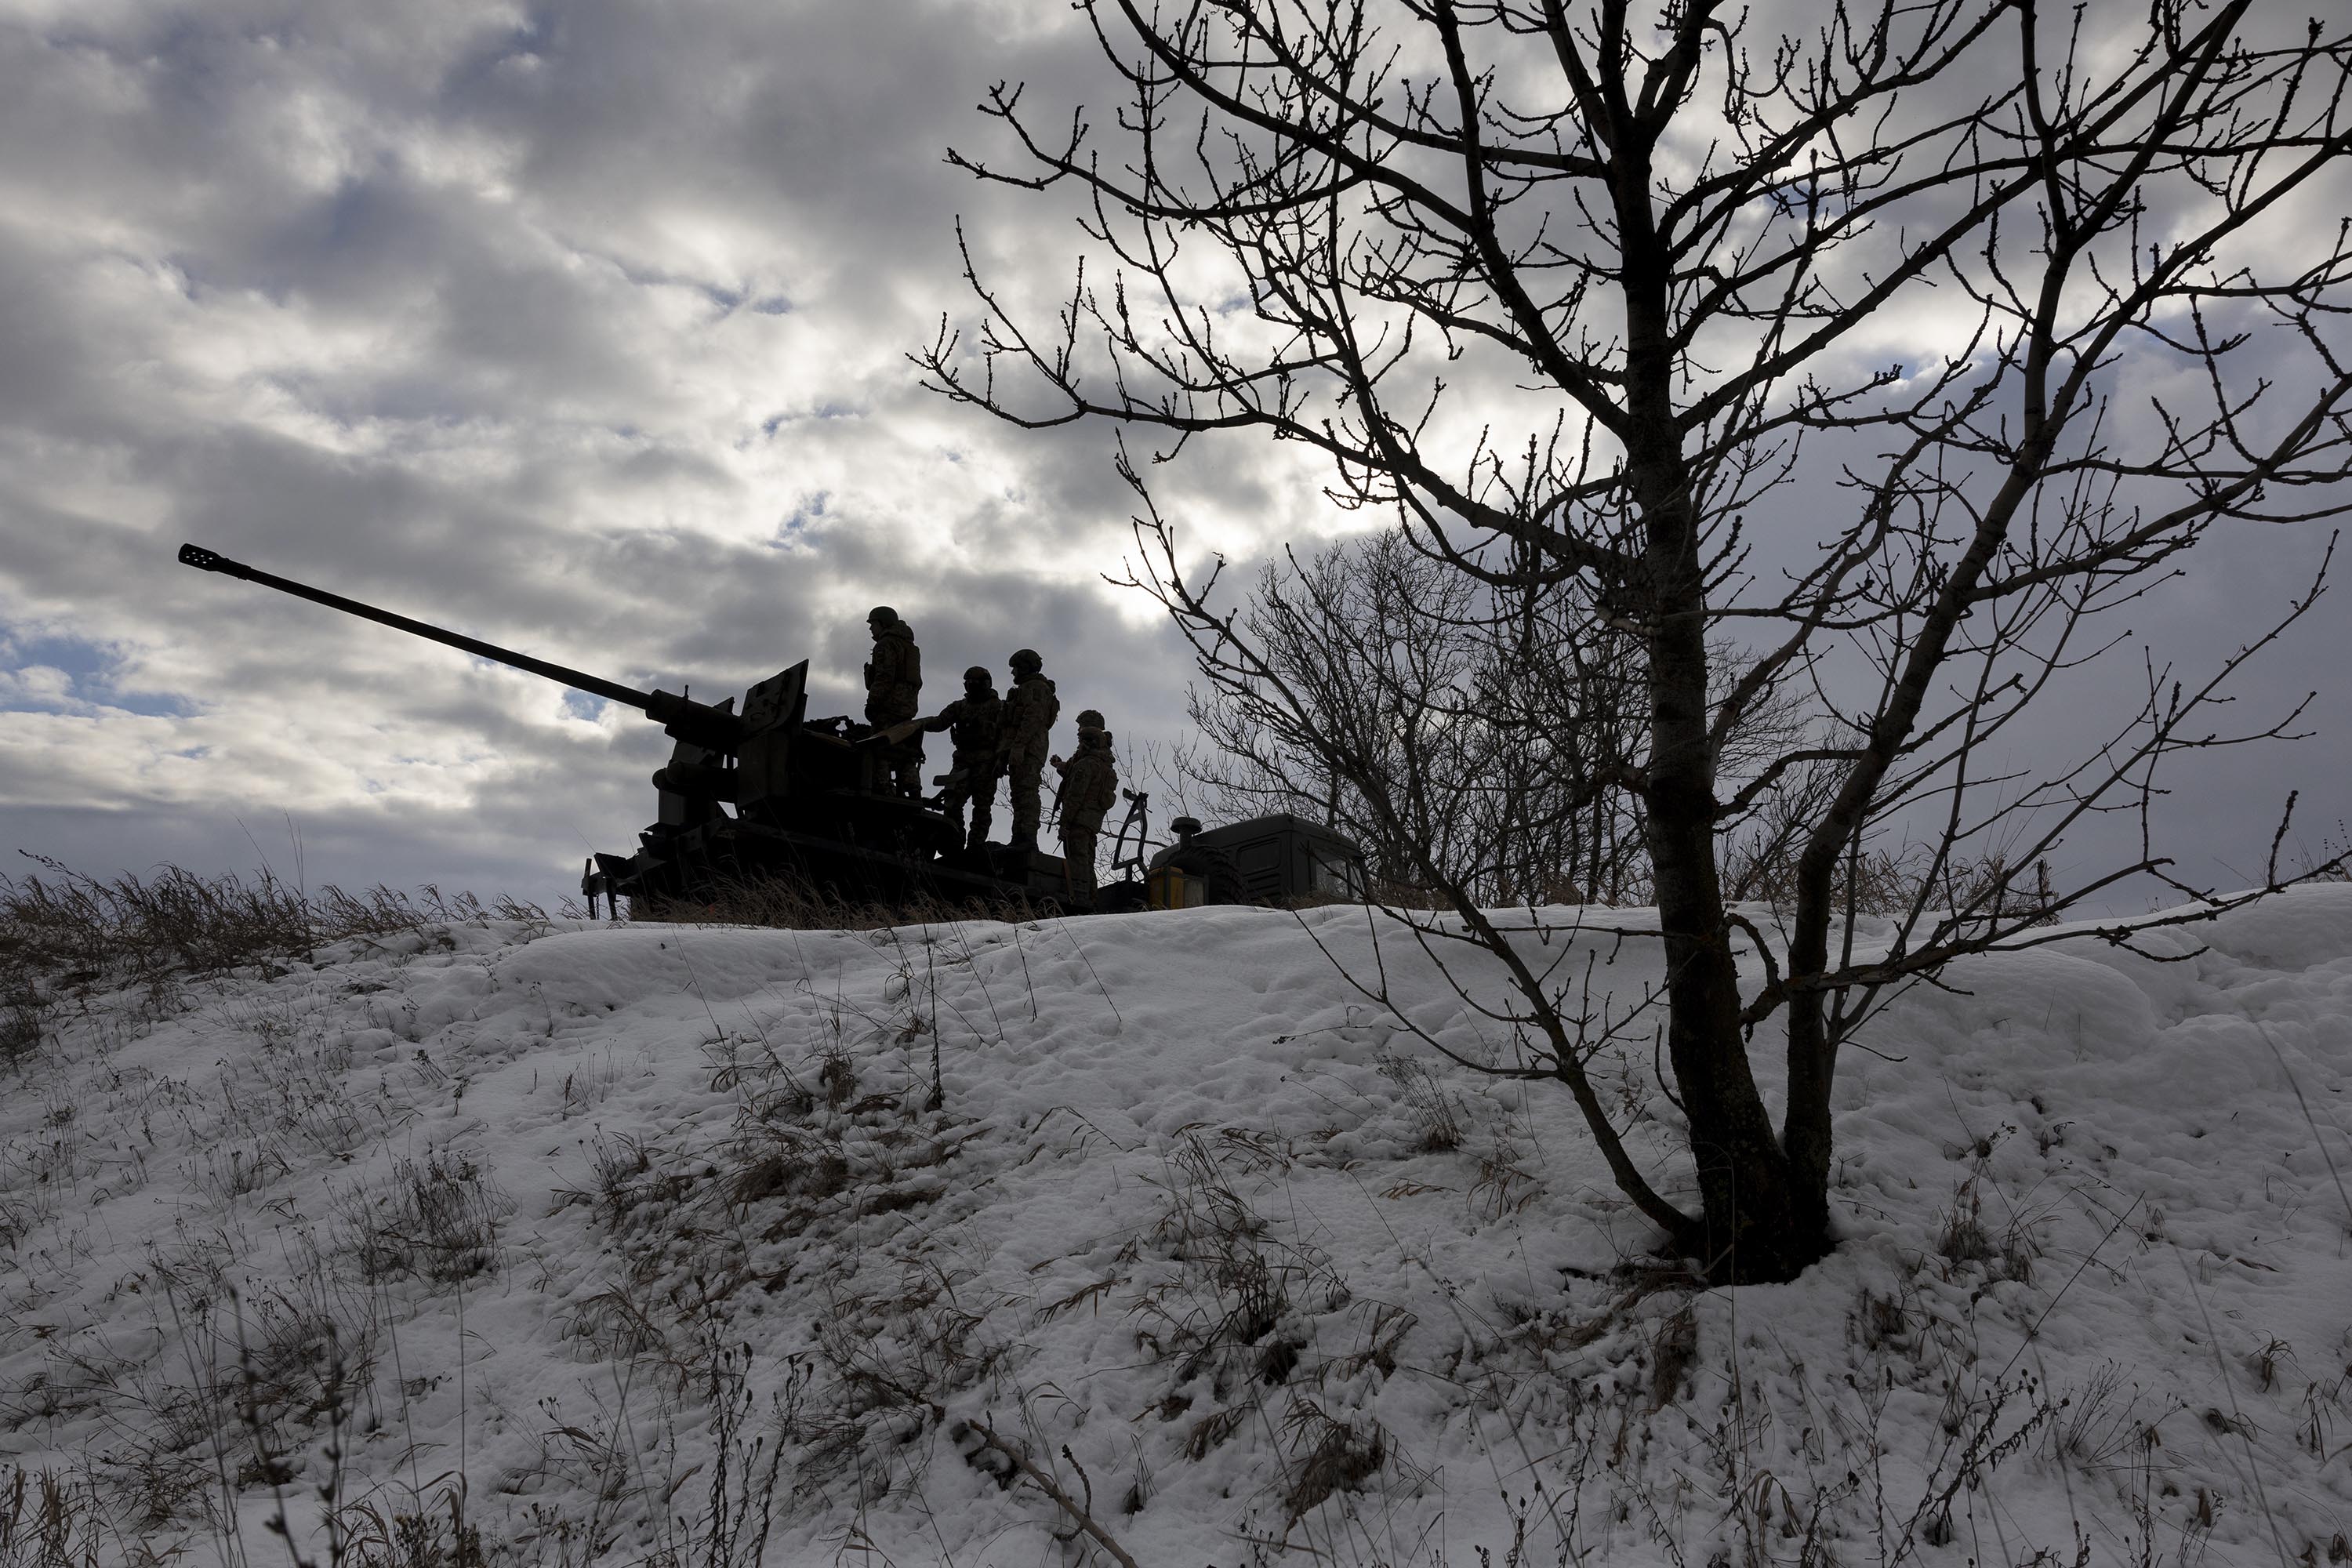 Ukrainian soldiers look towards Russian positions while atop an anti-aircraft gun on February 14, near Bakhmut, Ukraine.